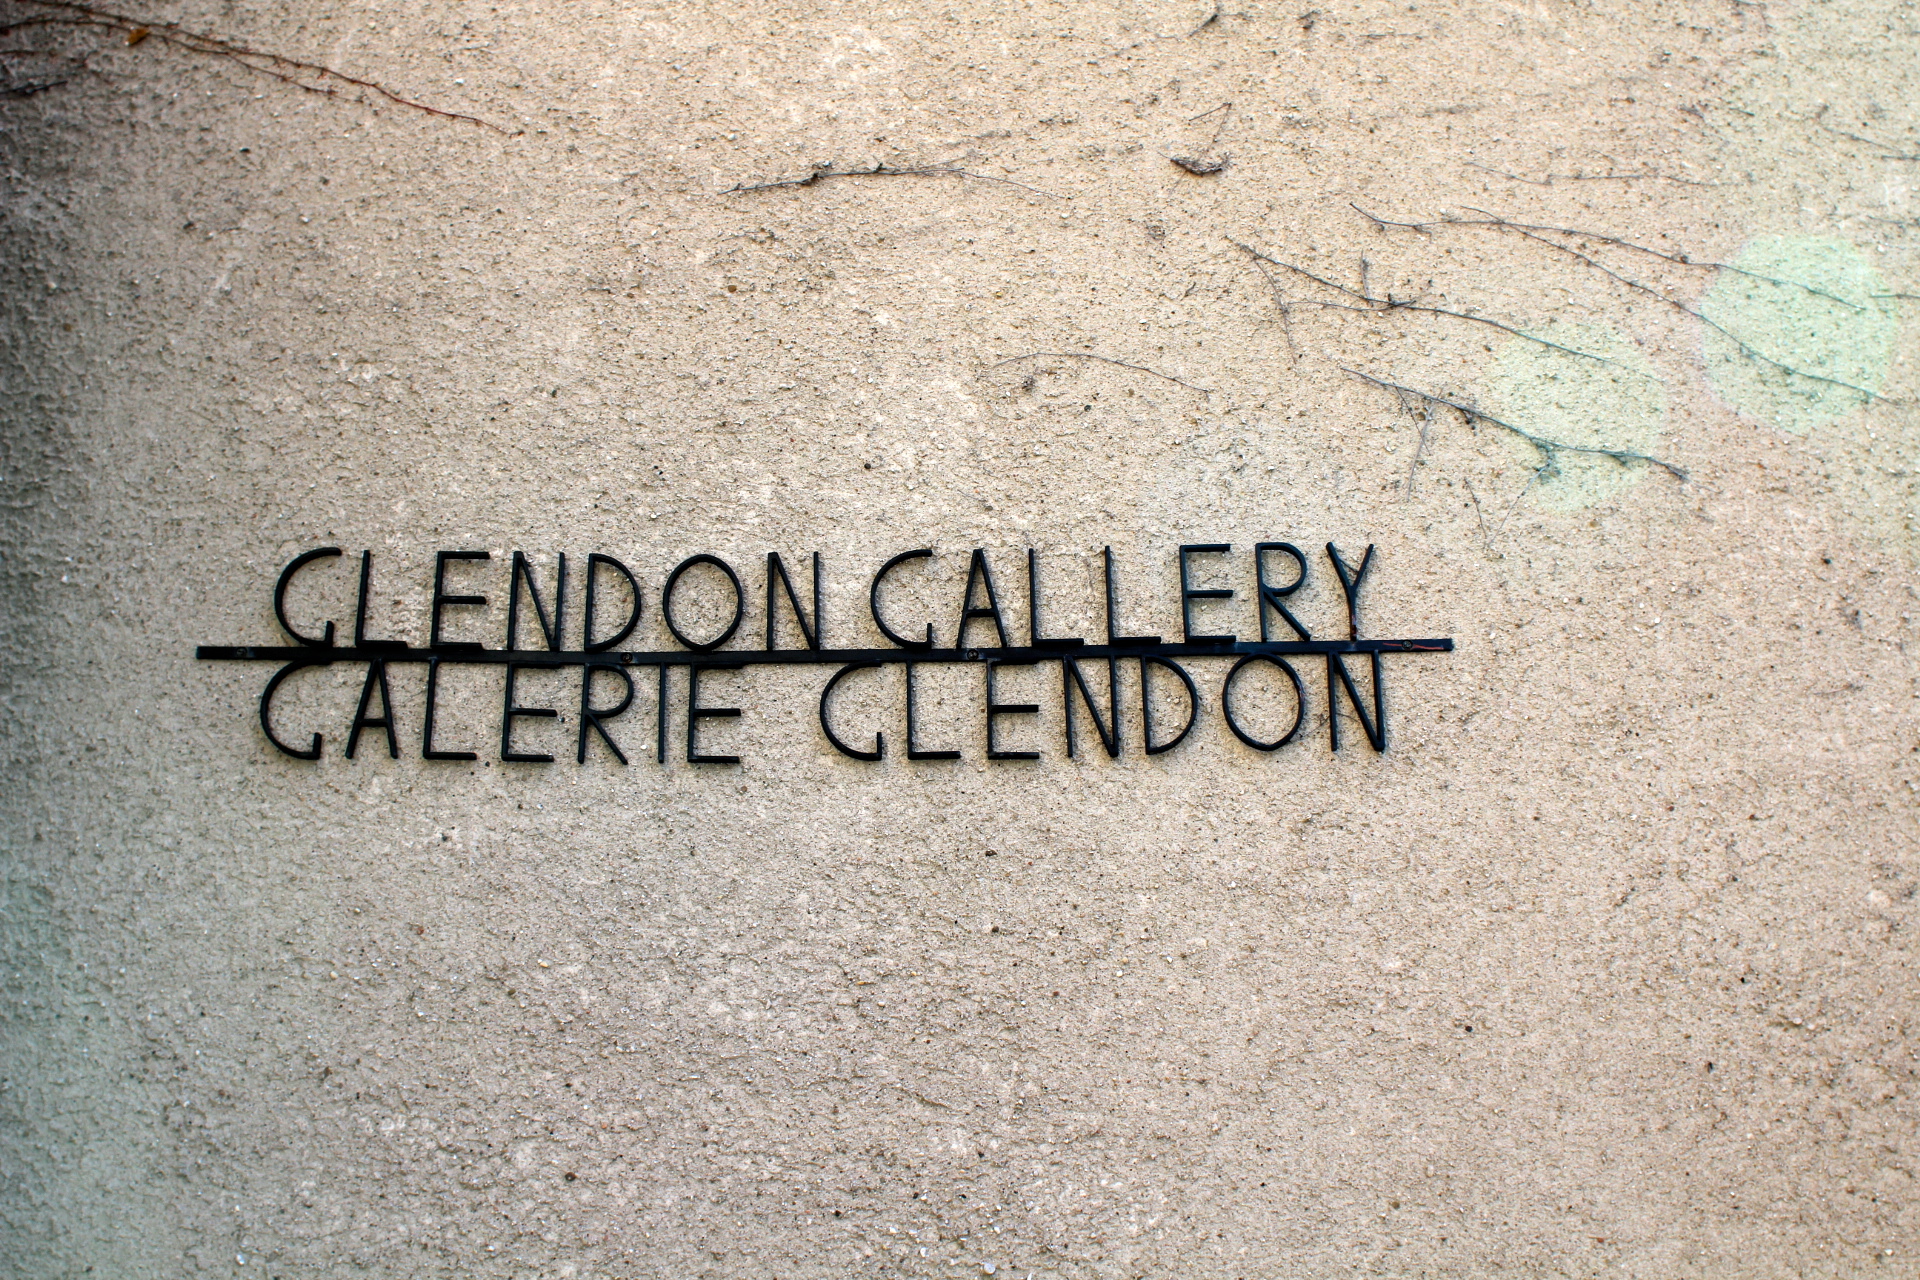 Glendon Gallery